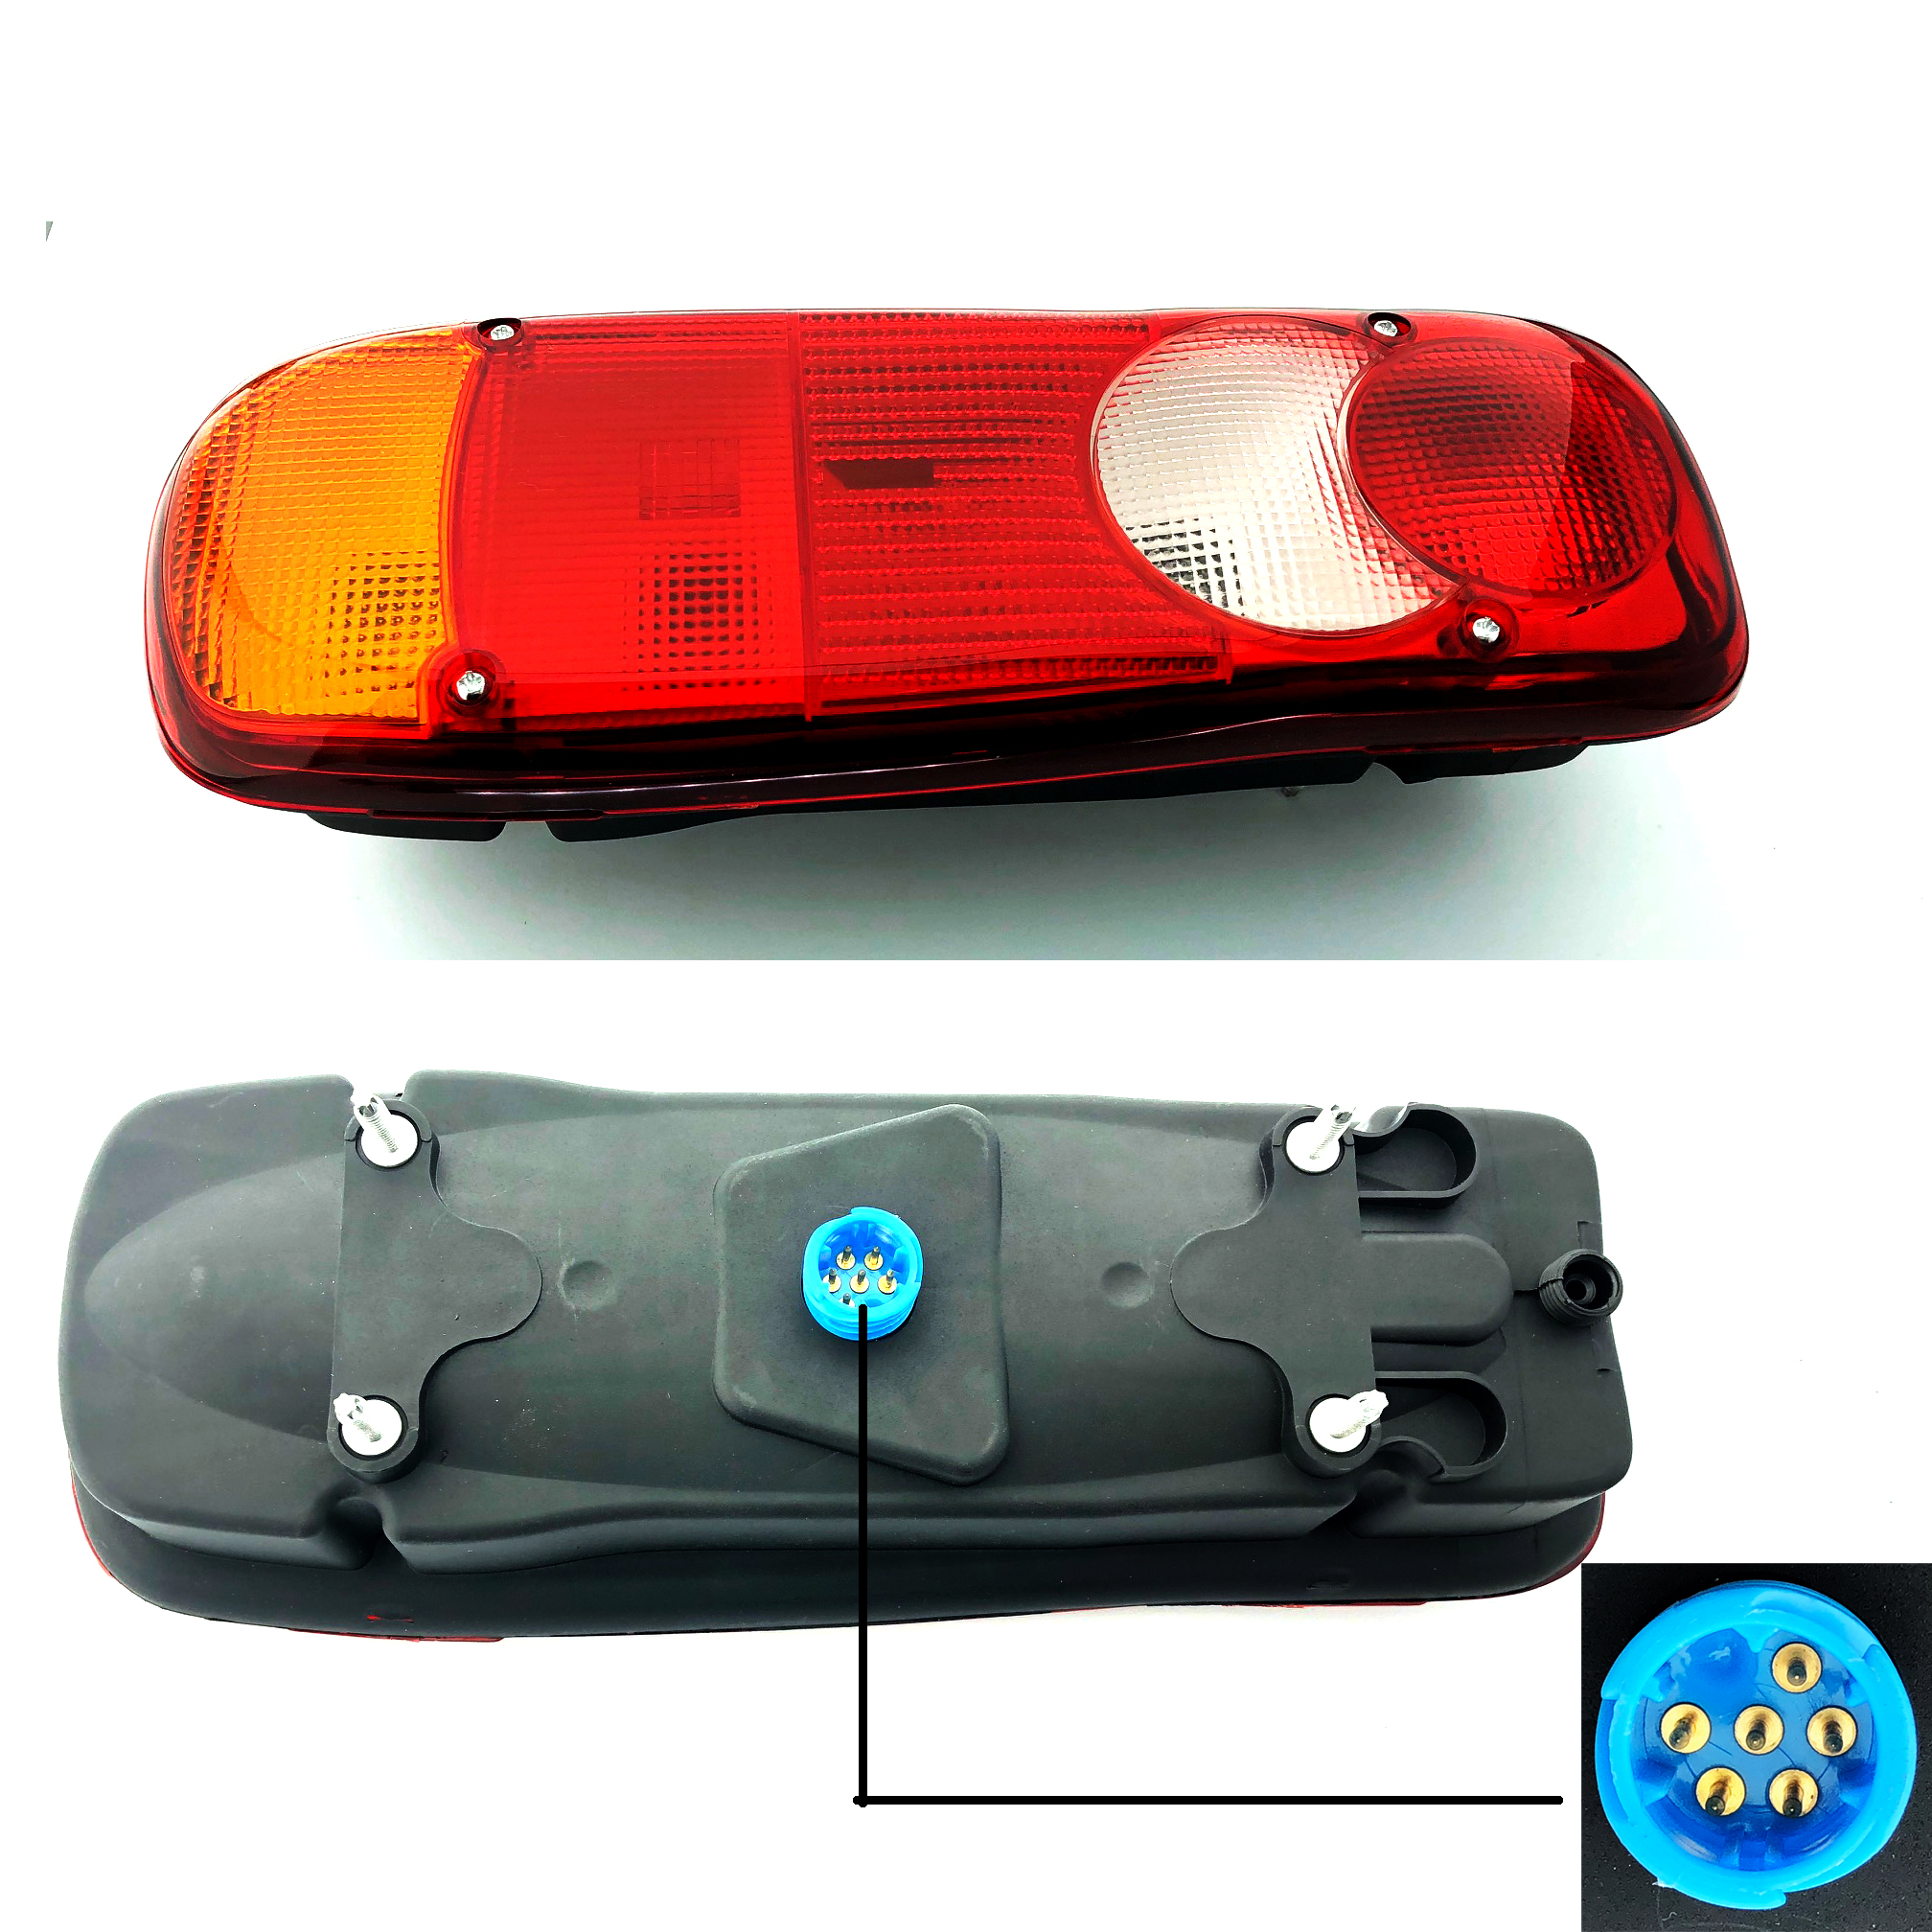 Citroen Relay Chasis Cab ( Lamp Lights ) VAN REAR LAMP LIGHT RIGHT HAND ( UK Driver Side ) 2012 to 2021 – VAN REAR LAMP LIGHT